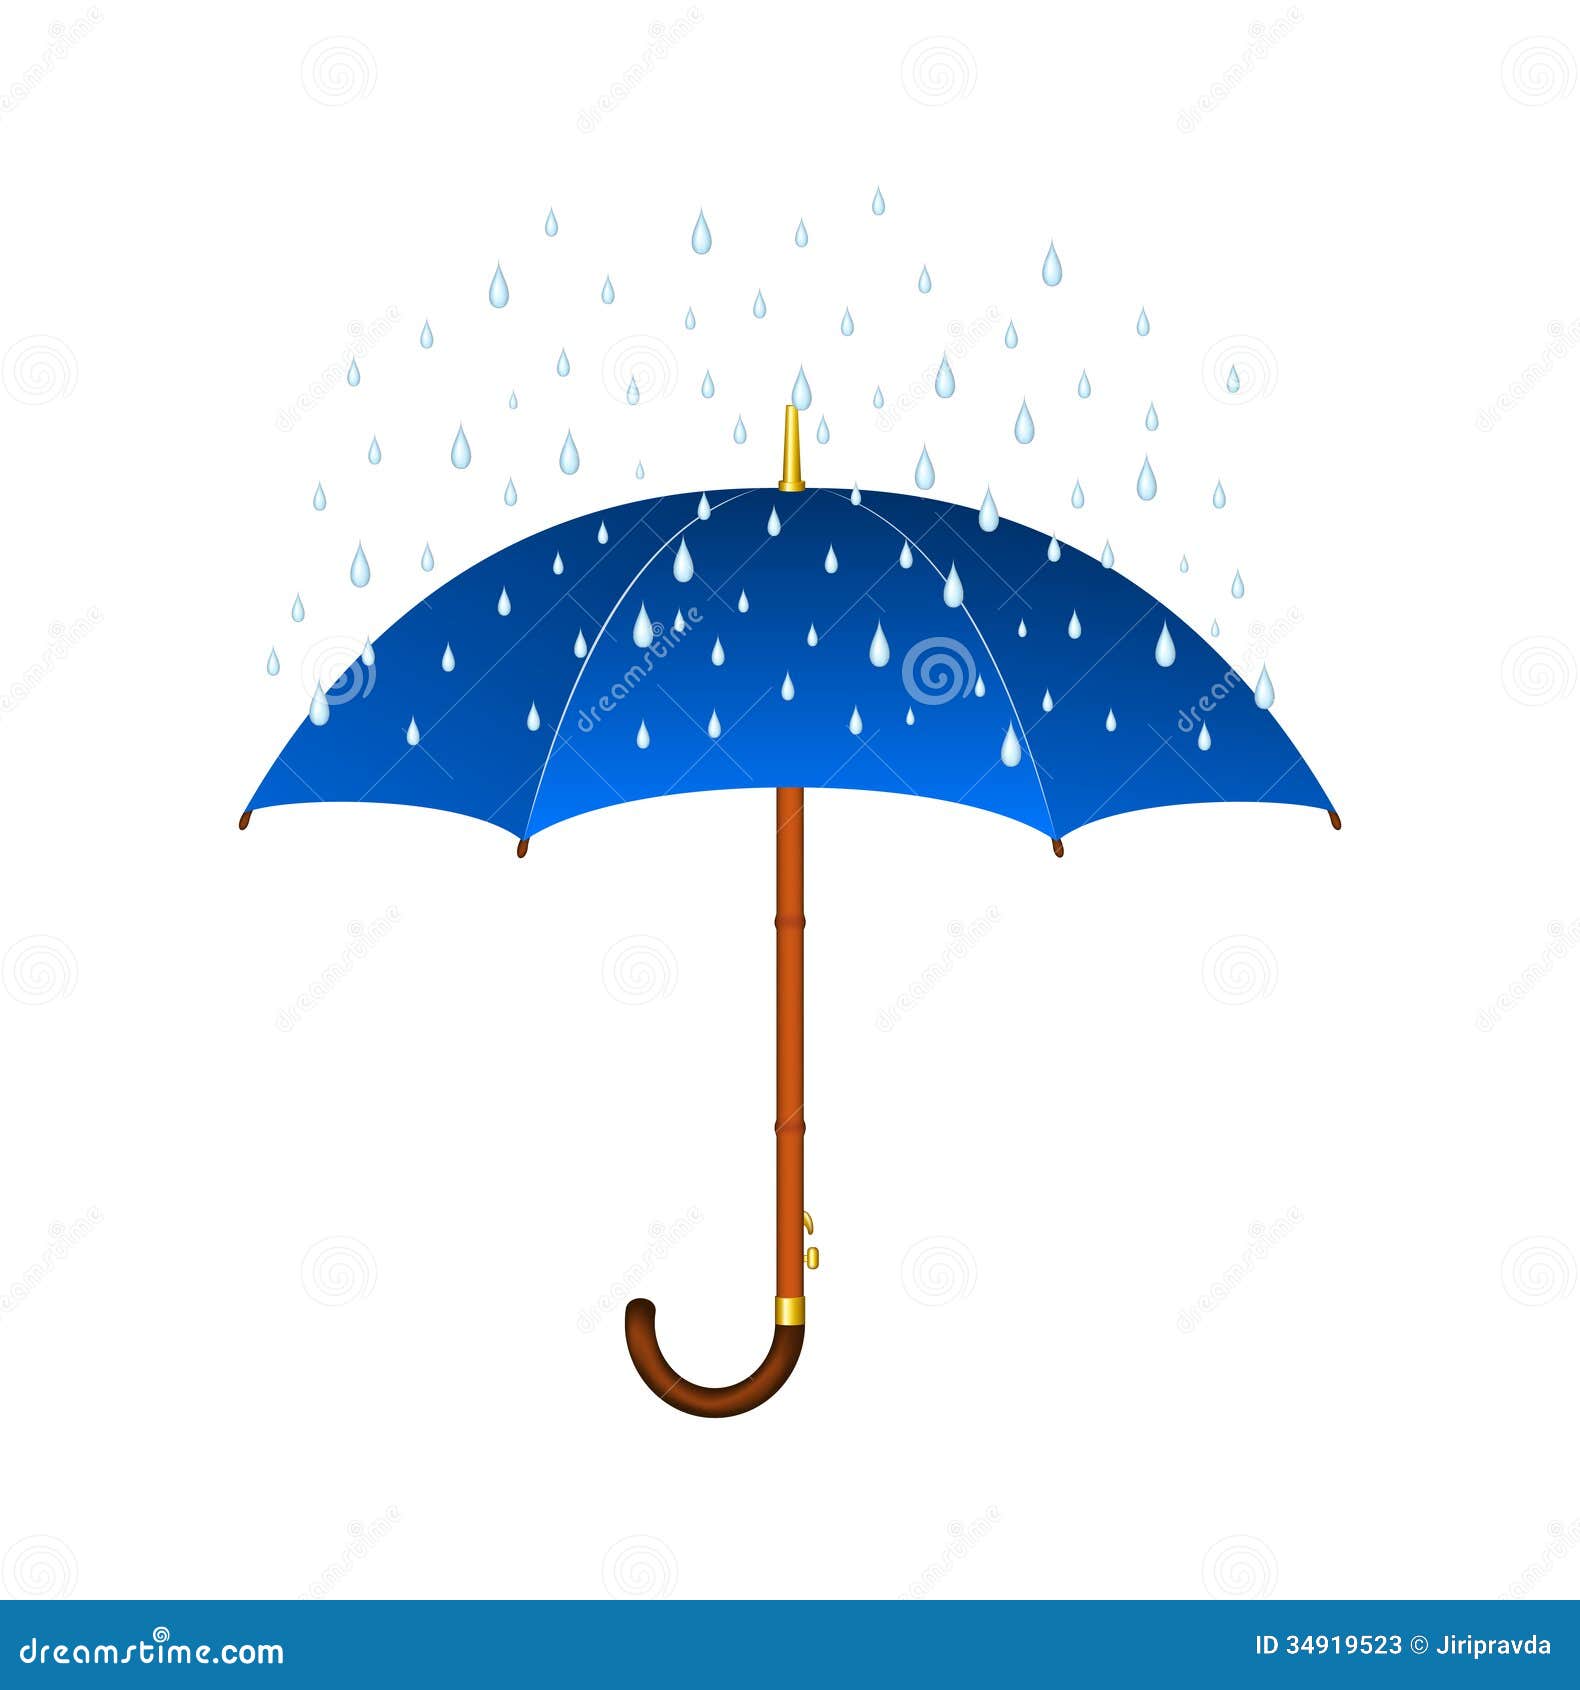 clipart umbrella and rain - photo #18